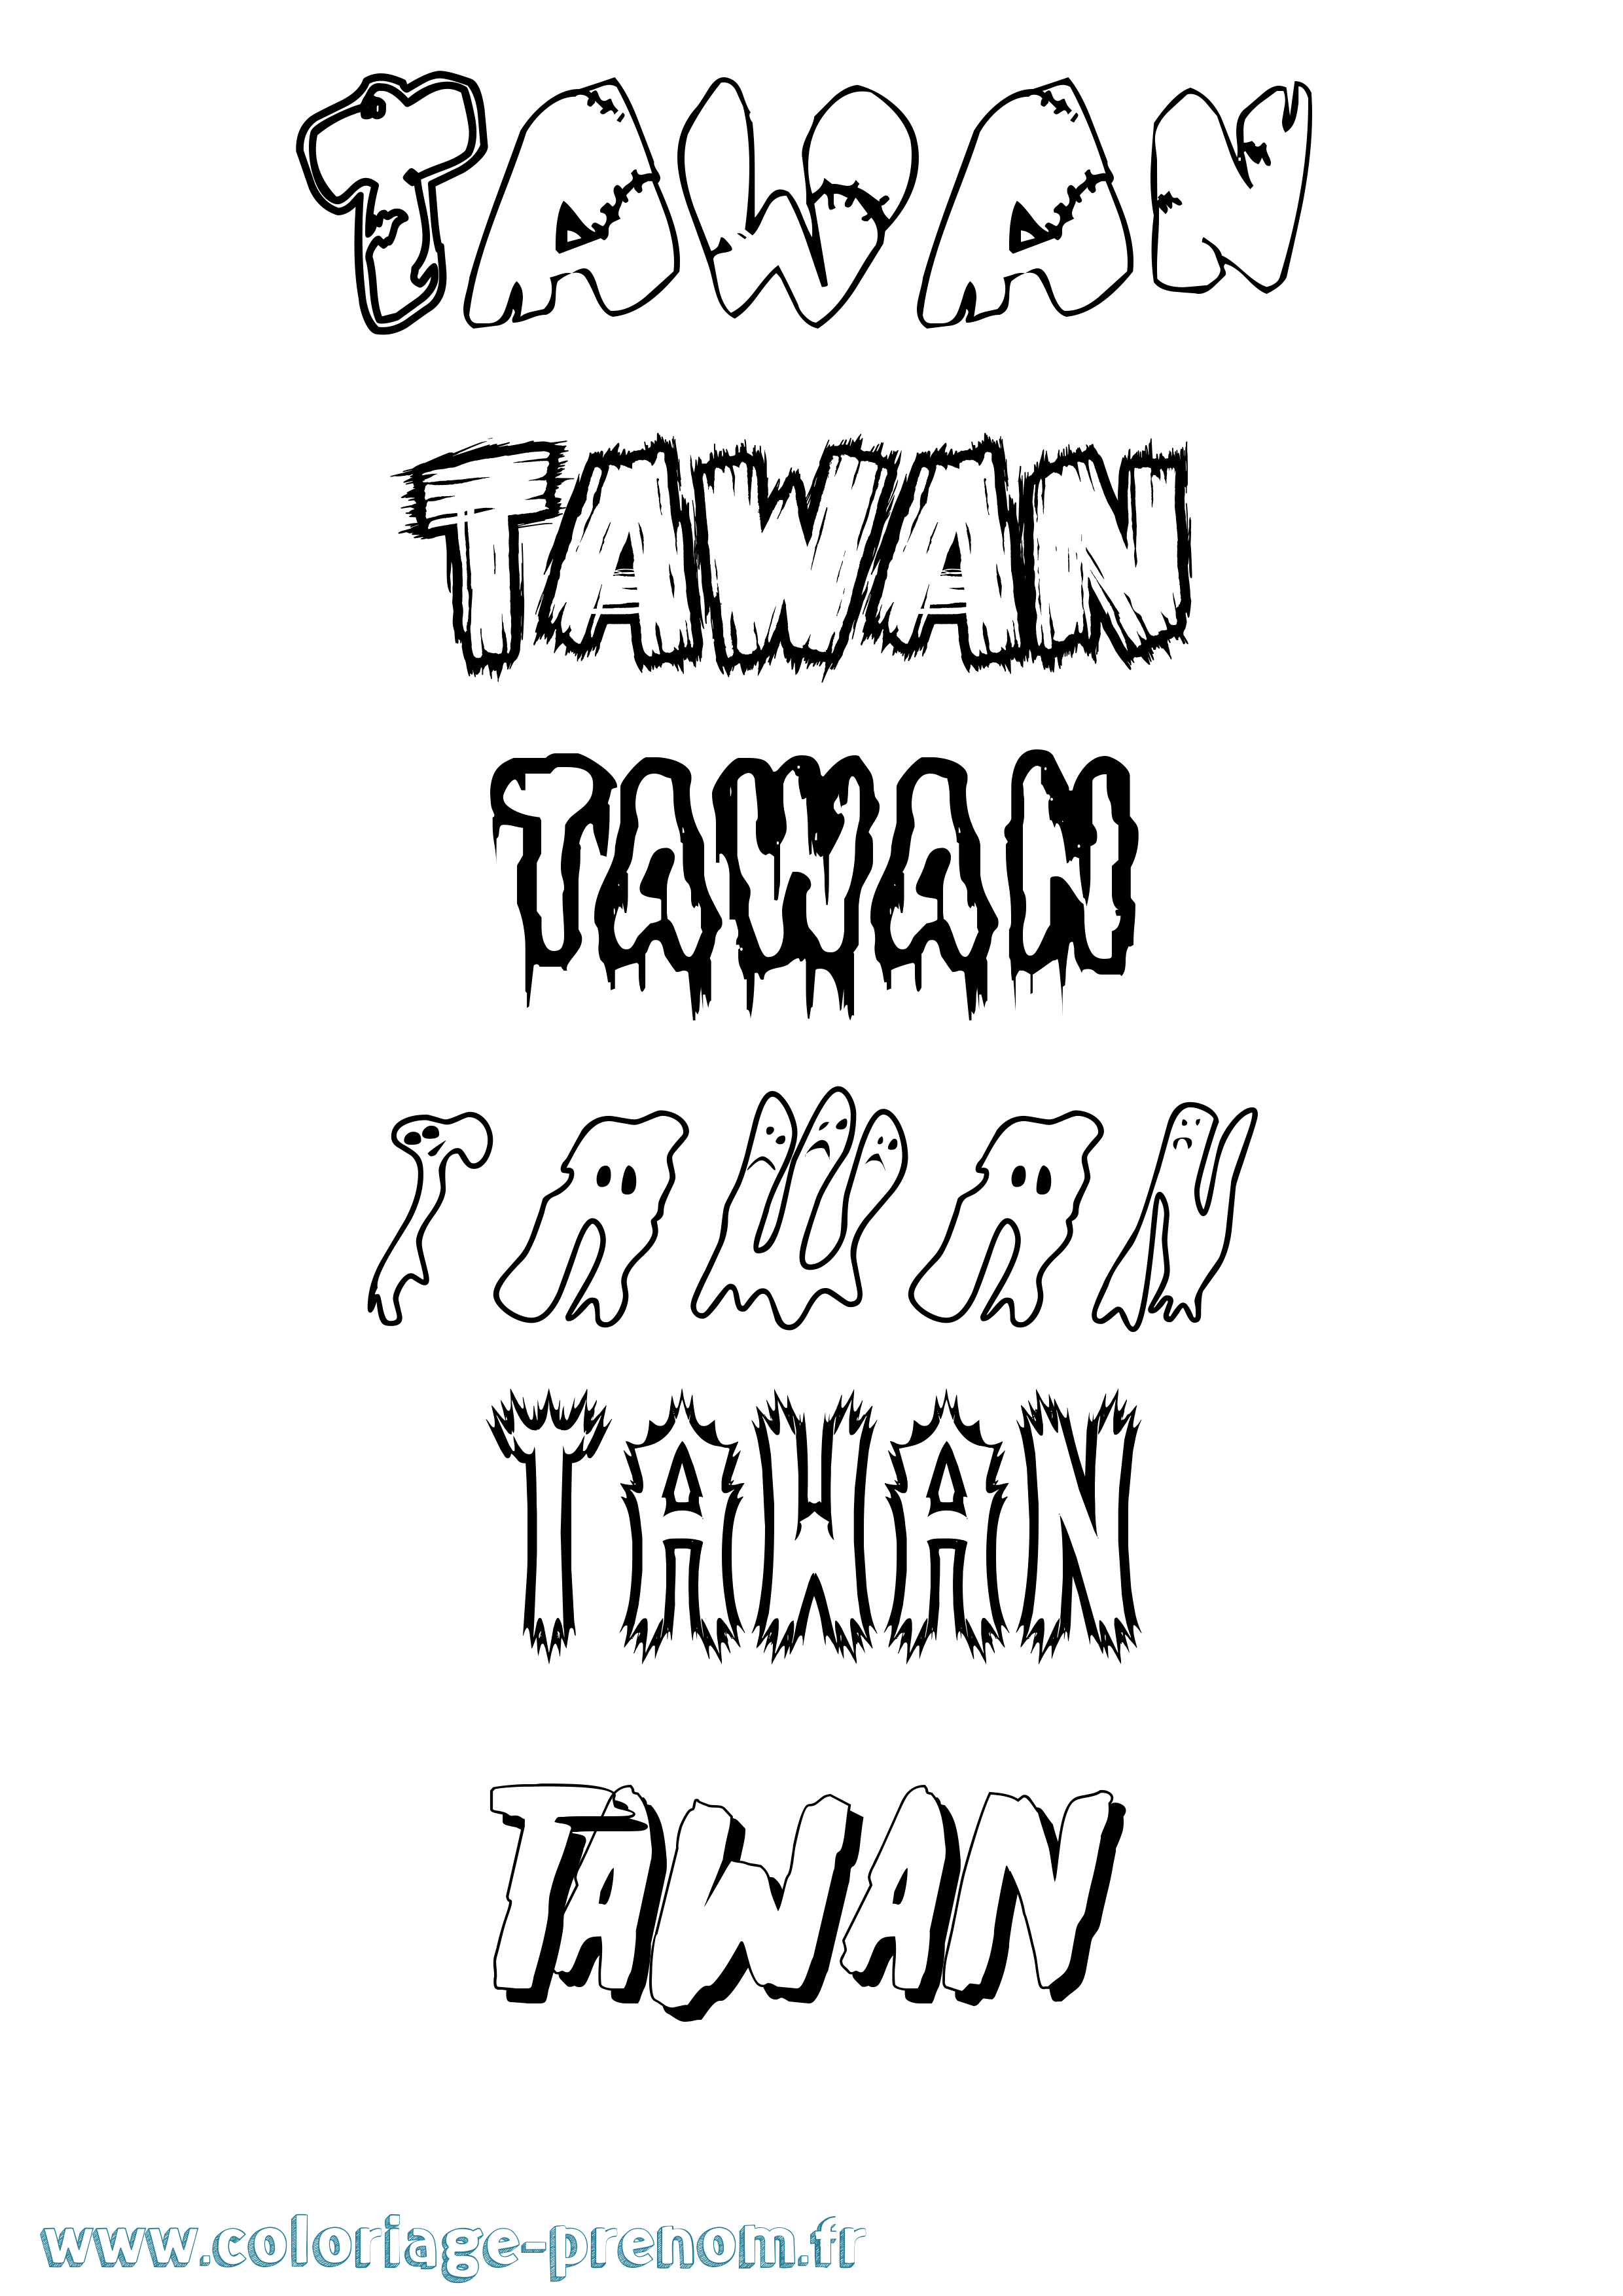 Coloriage prénom Tawan Frisson